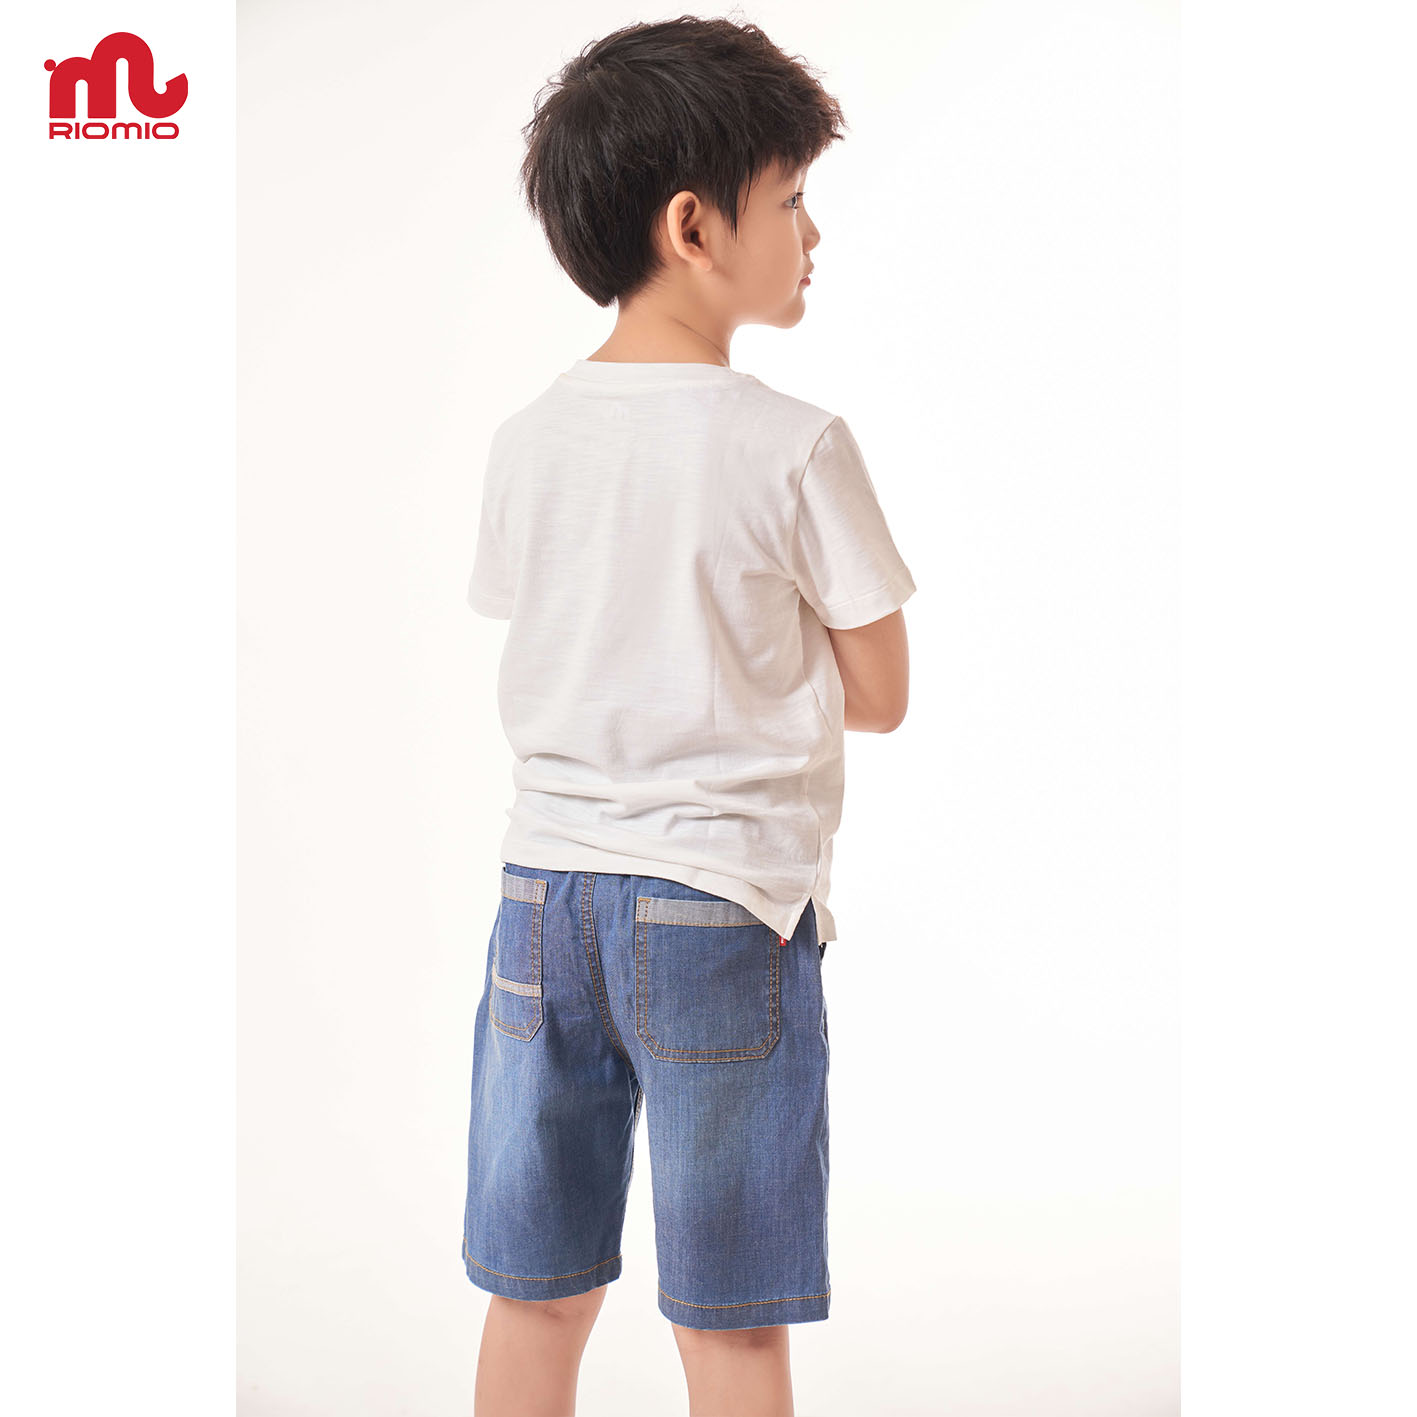 Quần Short jean cho bé trai 3-8tuổi Riomio chất liệu 100% cotton jeans cao cấp thấm hút,mềm mịn- RM079